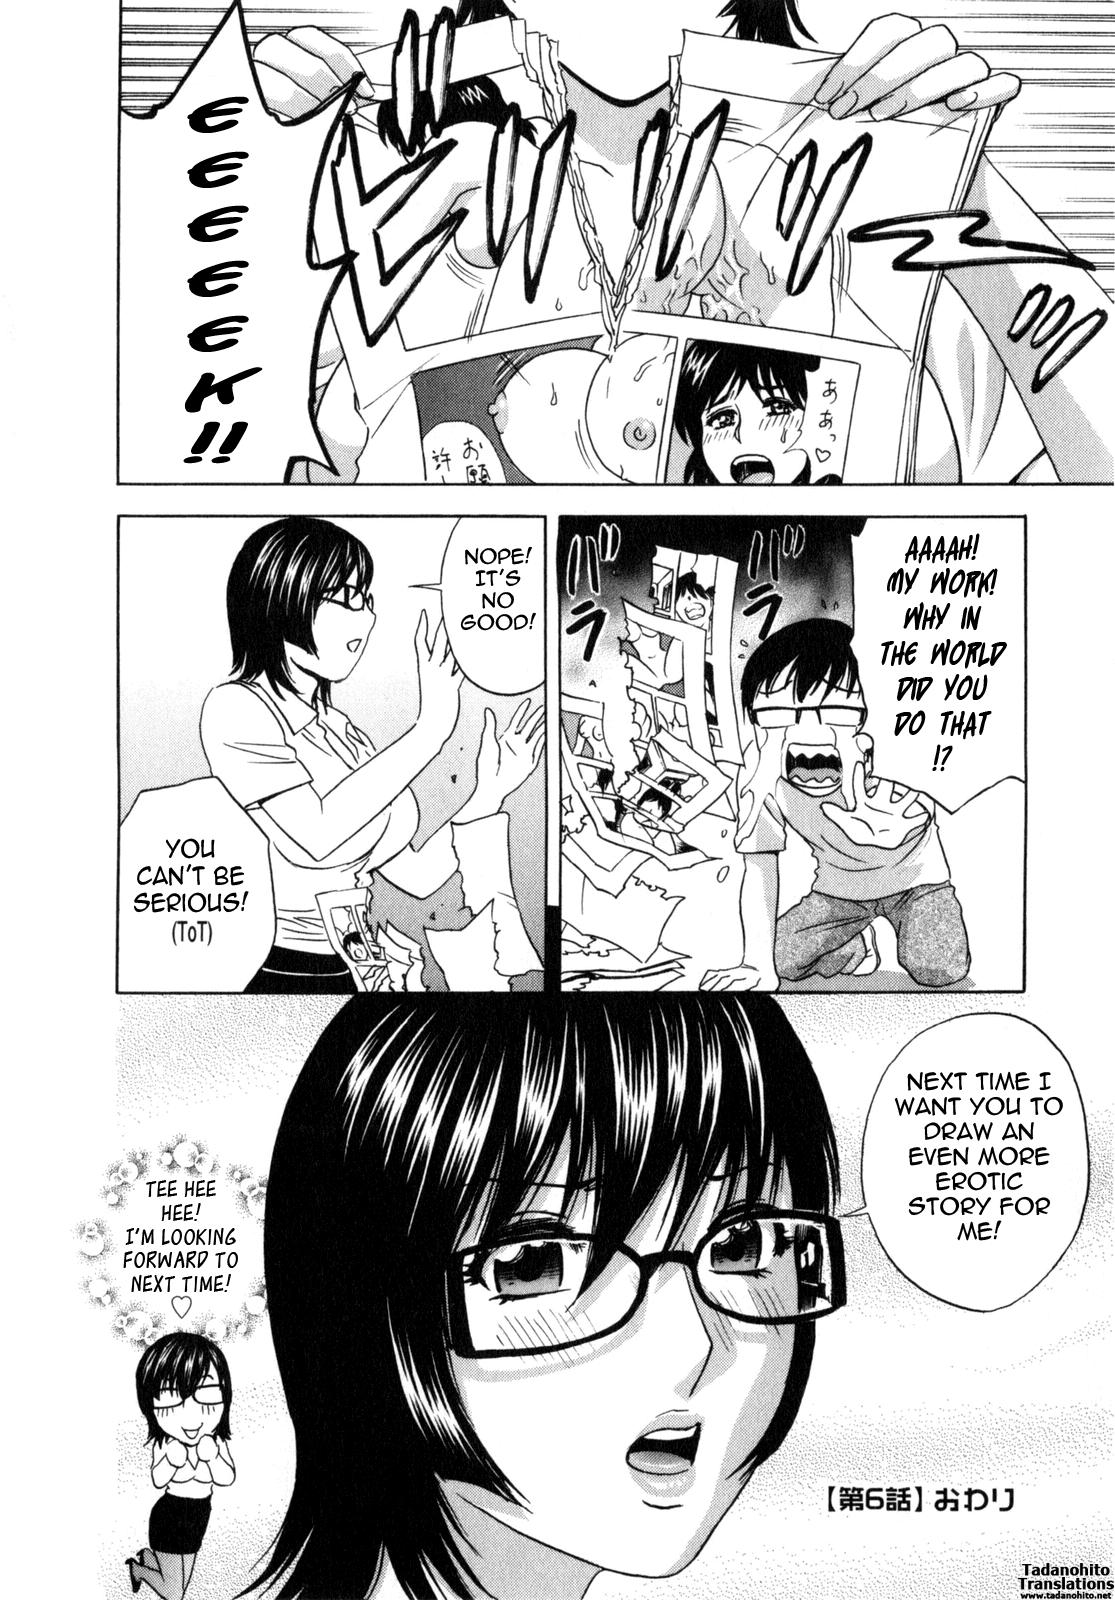 [Hidemaru] Life with Married Women Just Like a Manga 1 - Ch. 1-7 [English] {Tadanohito} 121